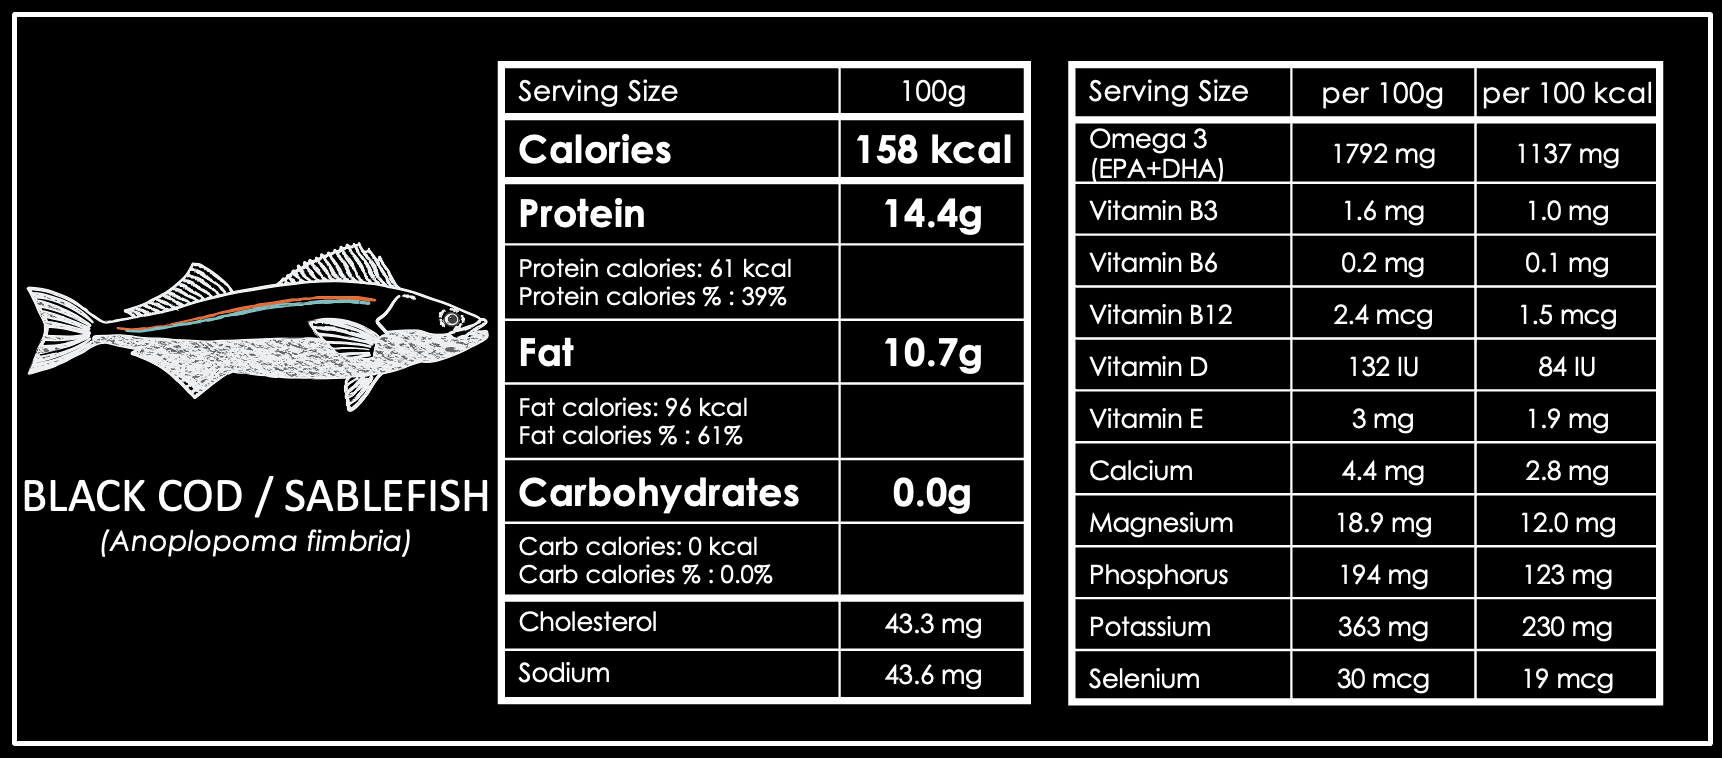 Sablefish Black Cod Nutrient Information.png